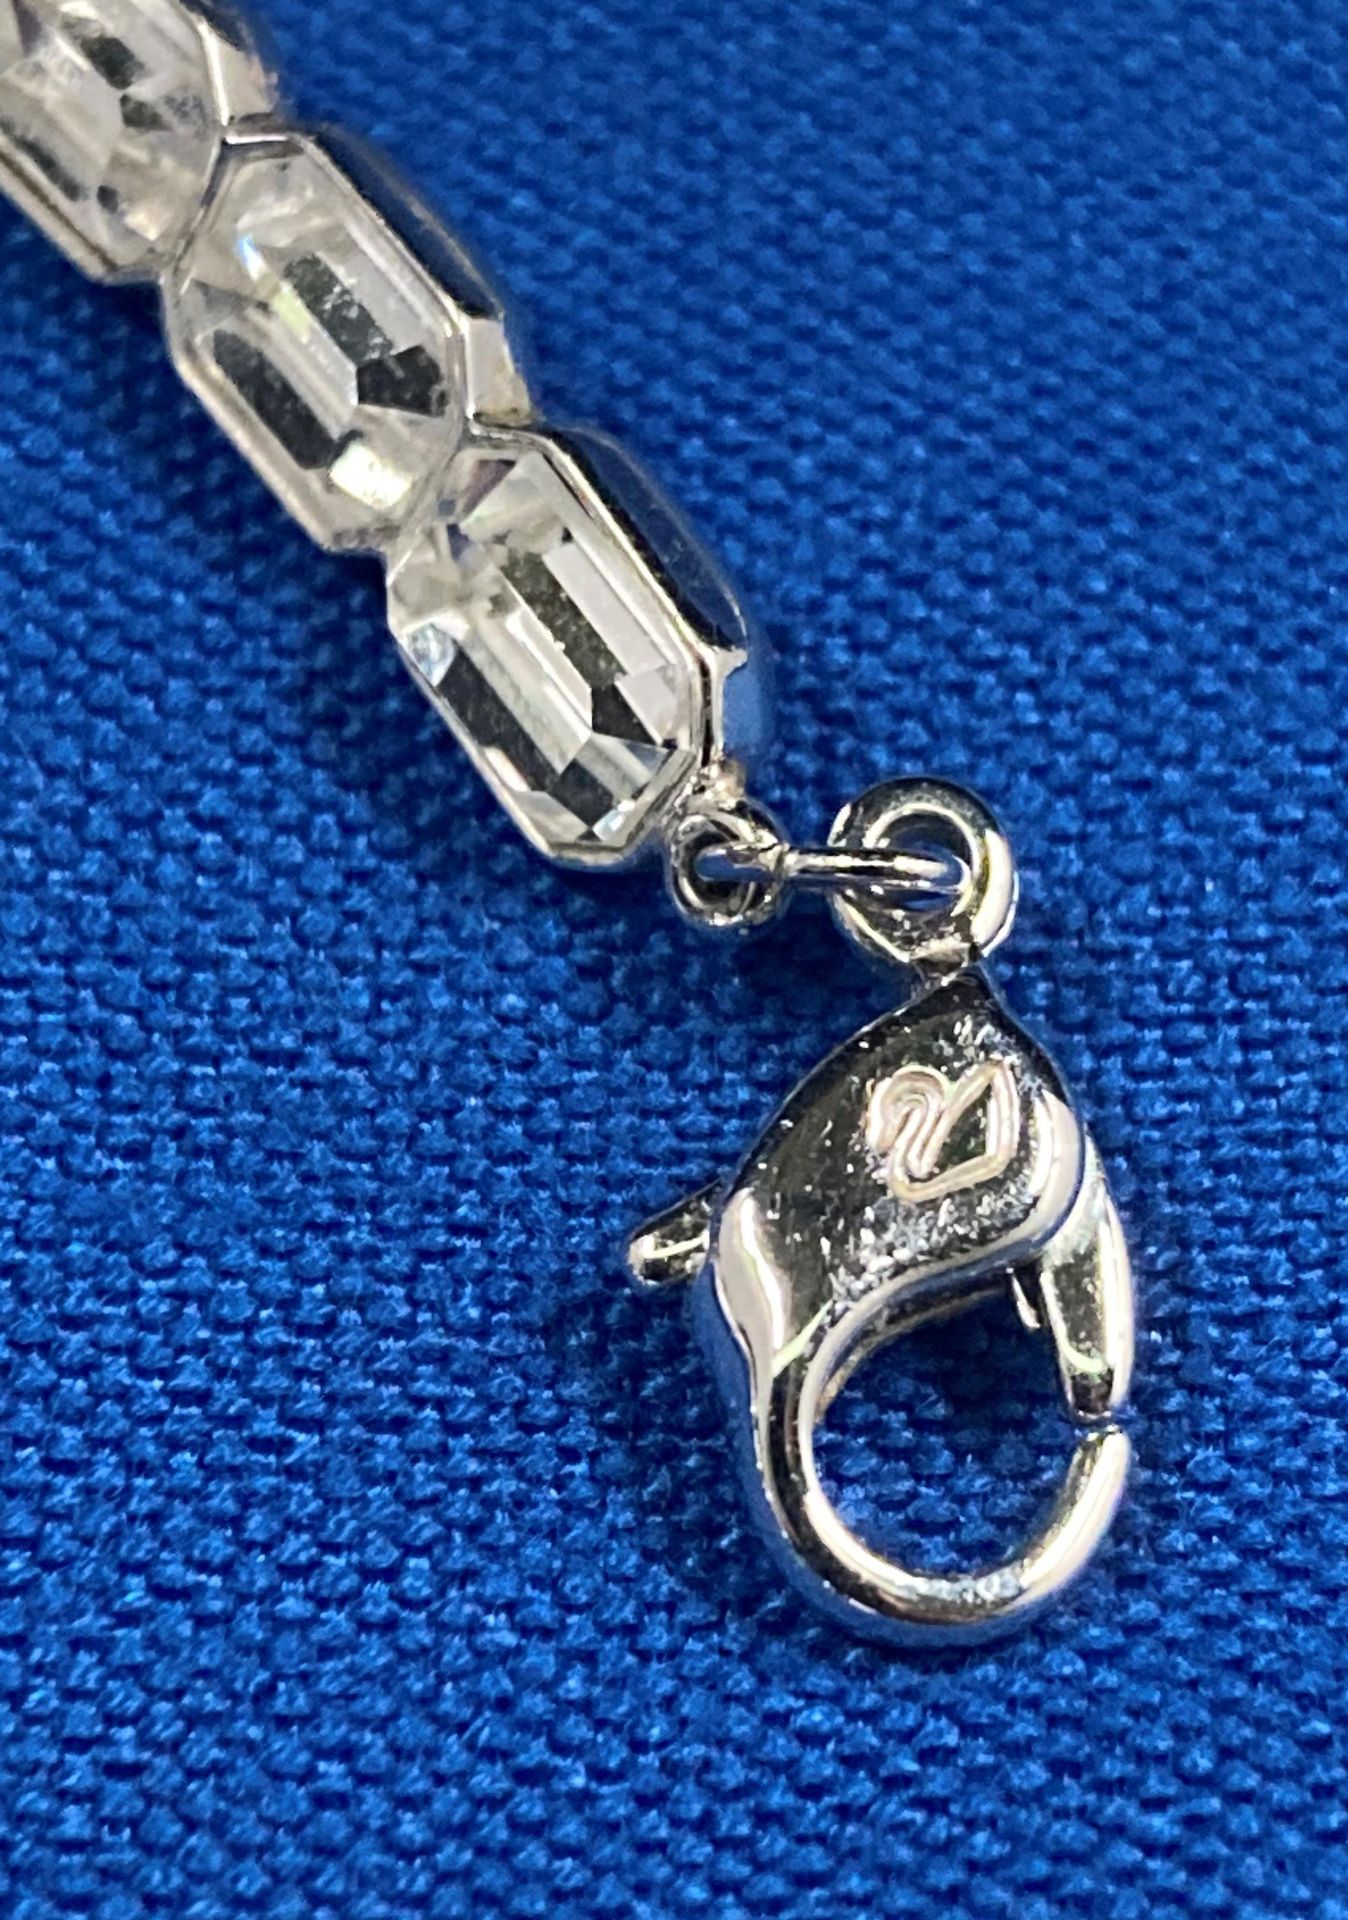 A Swarovski ladies crystal necklace, - Image 3 of 3